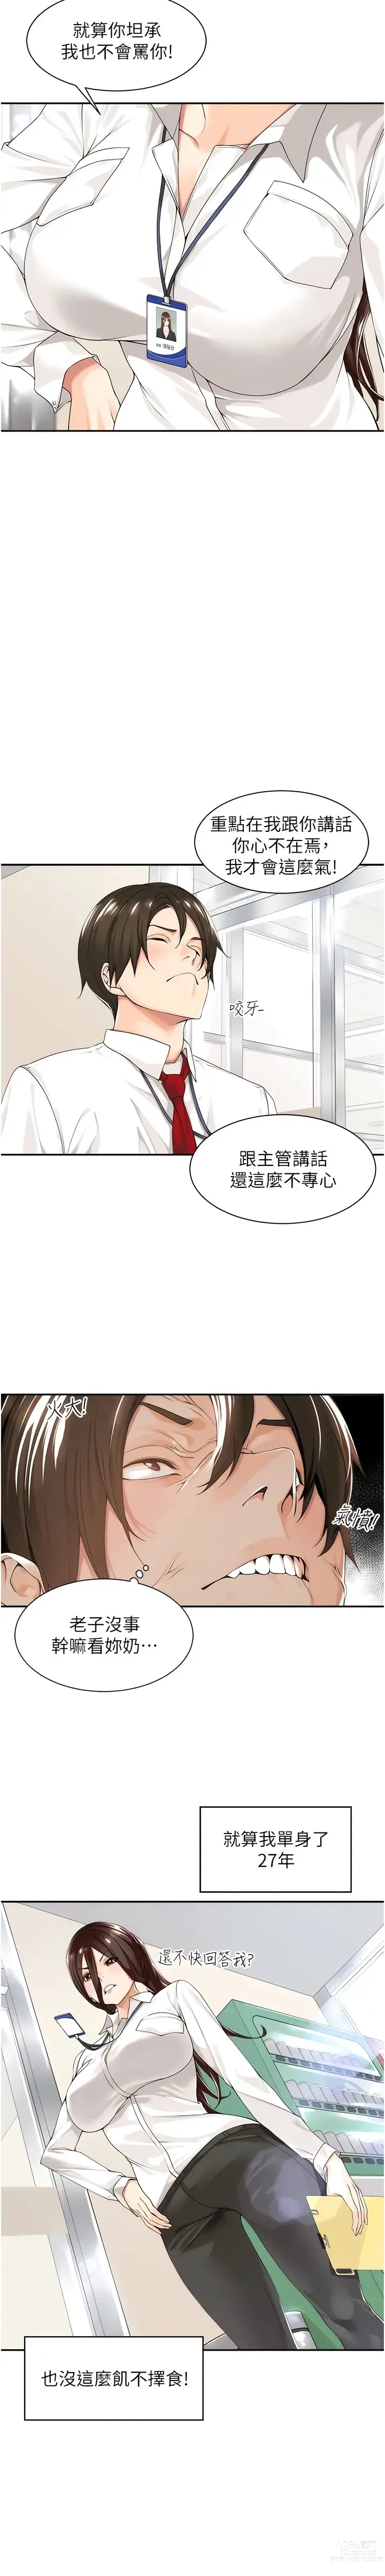 Page 6 of manga 工做狂女上司 1-10話